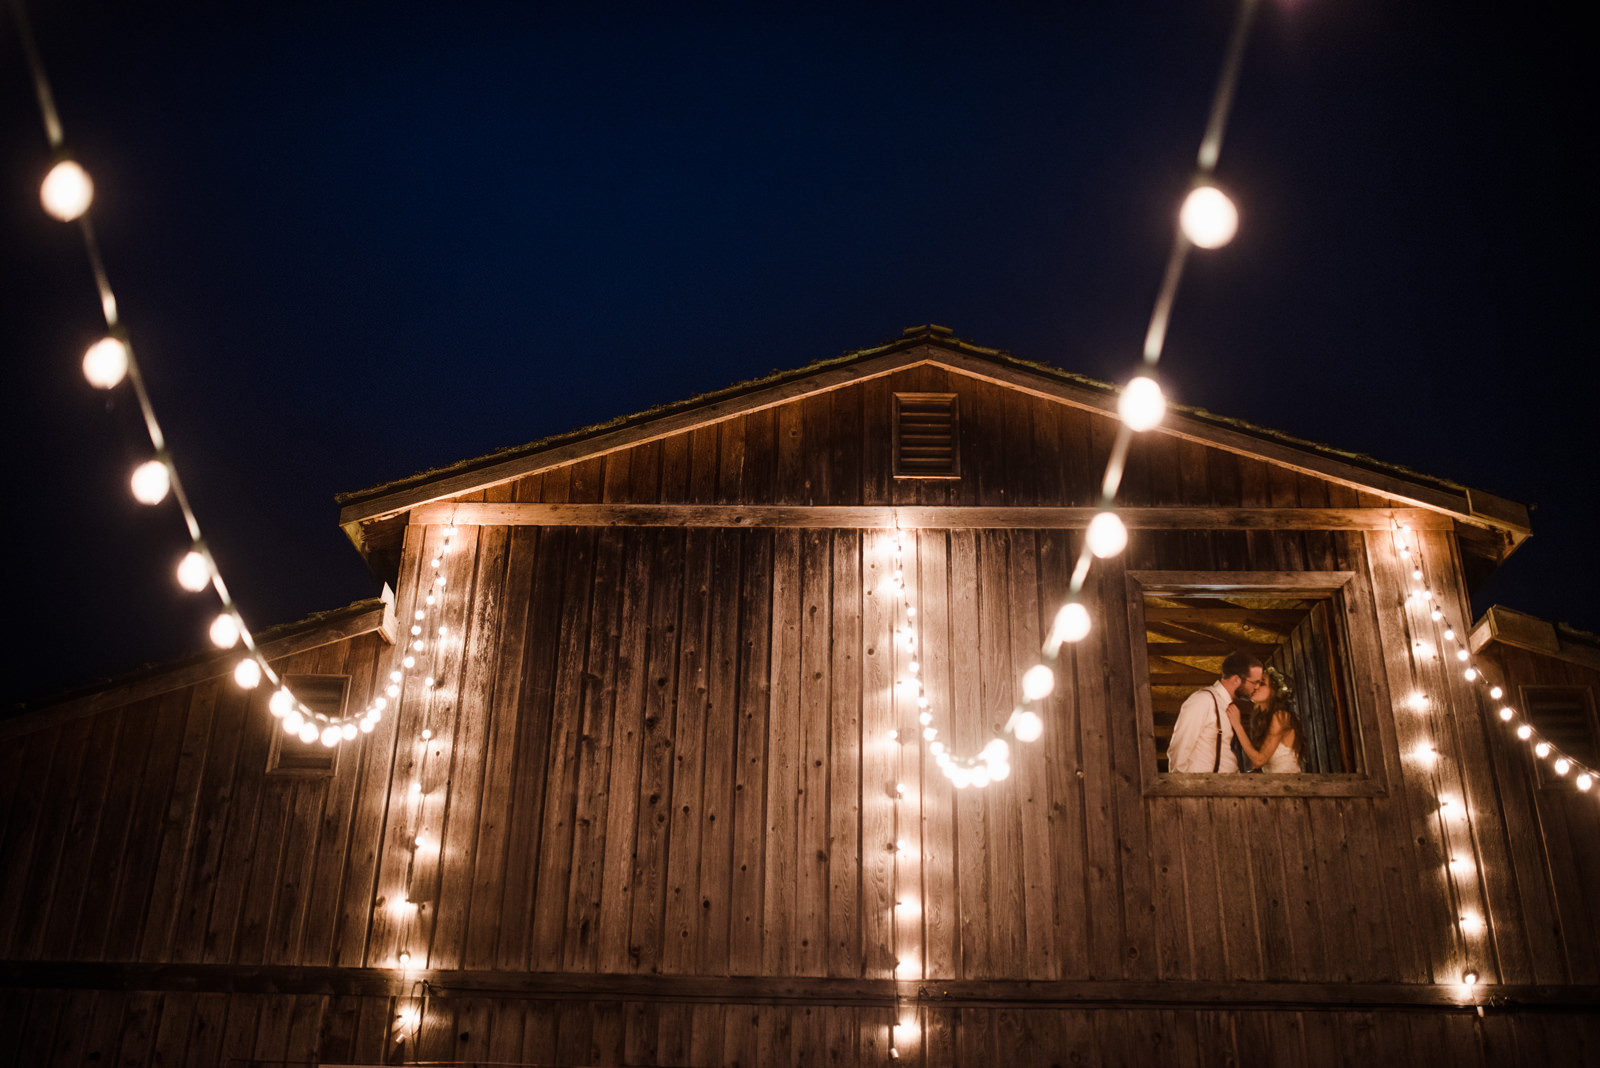 177-backyard-barn-wedding-photo-with-hanging-cafe-lights-by-ryan-flynn.jpg